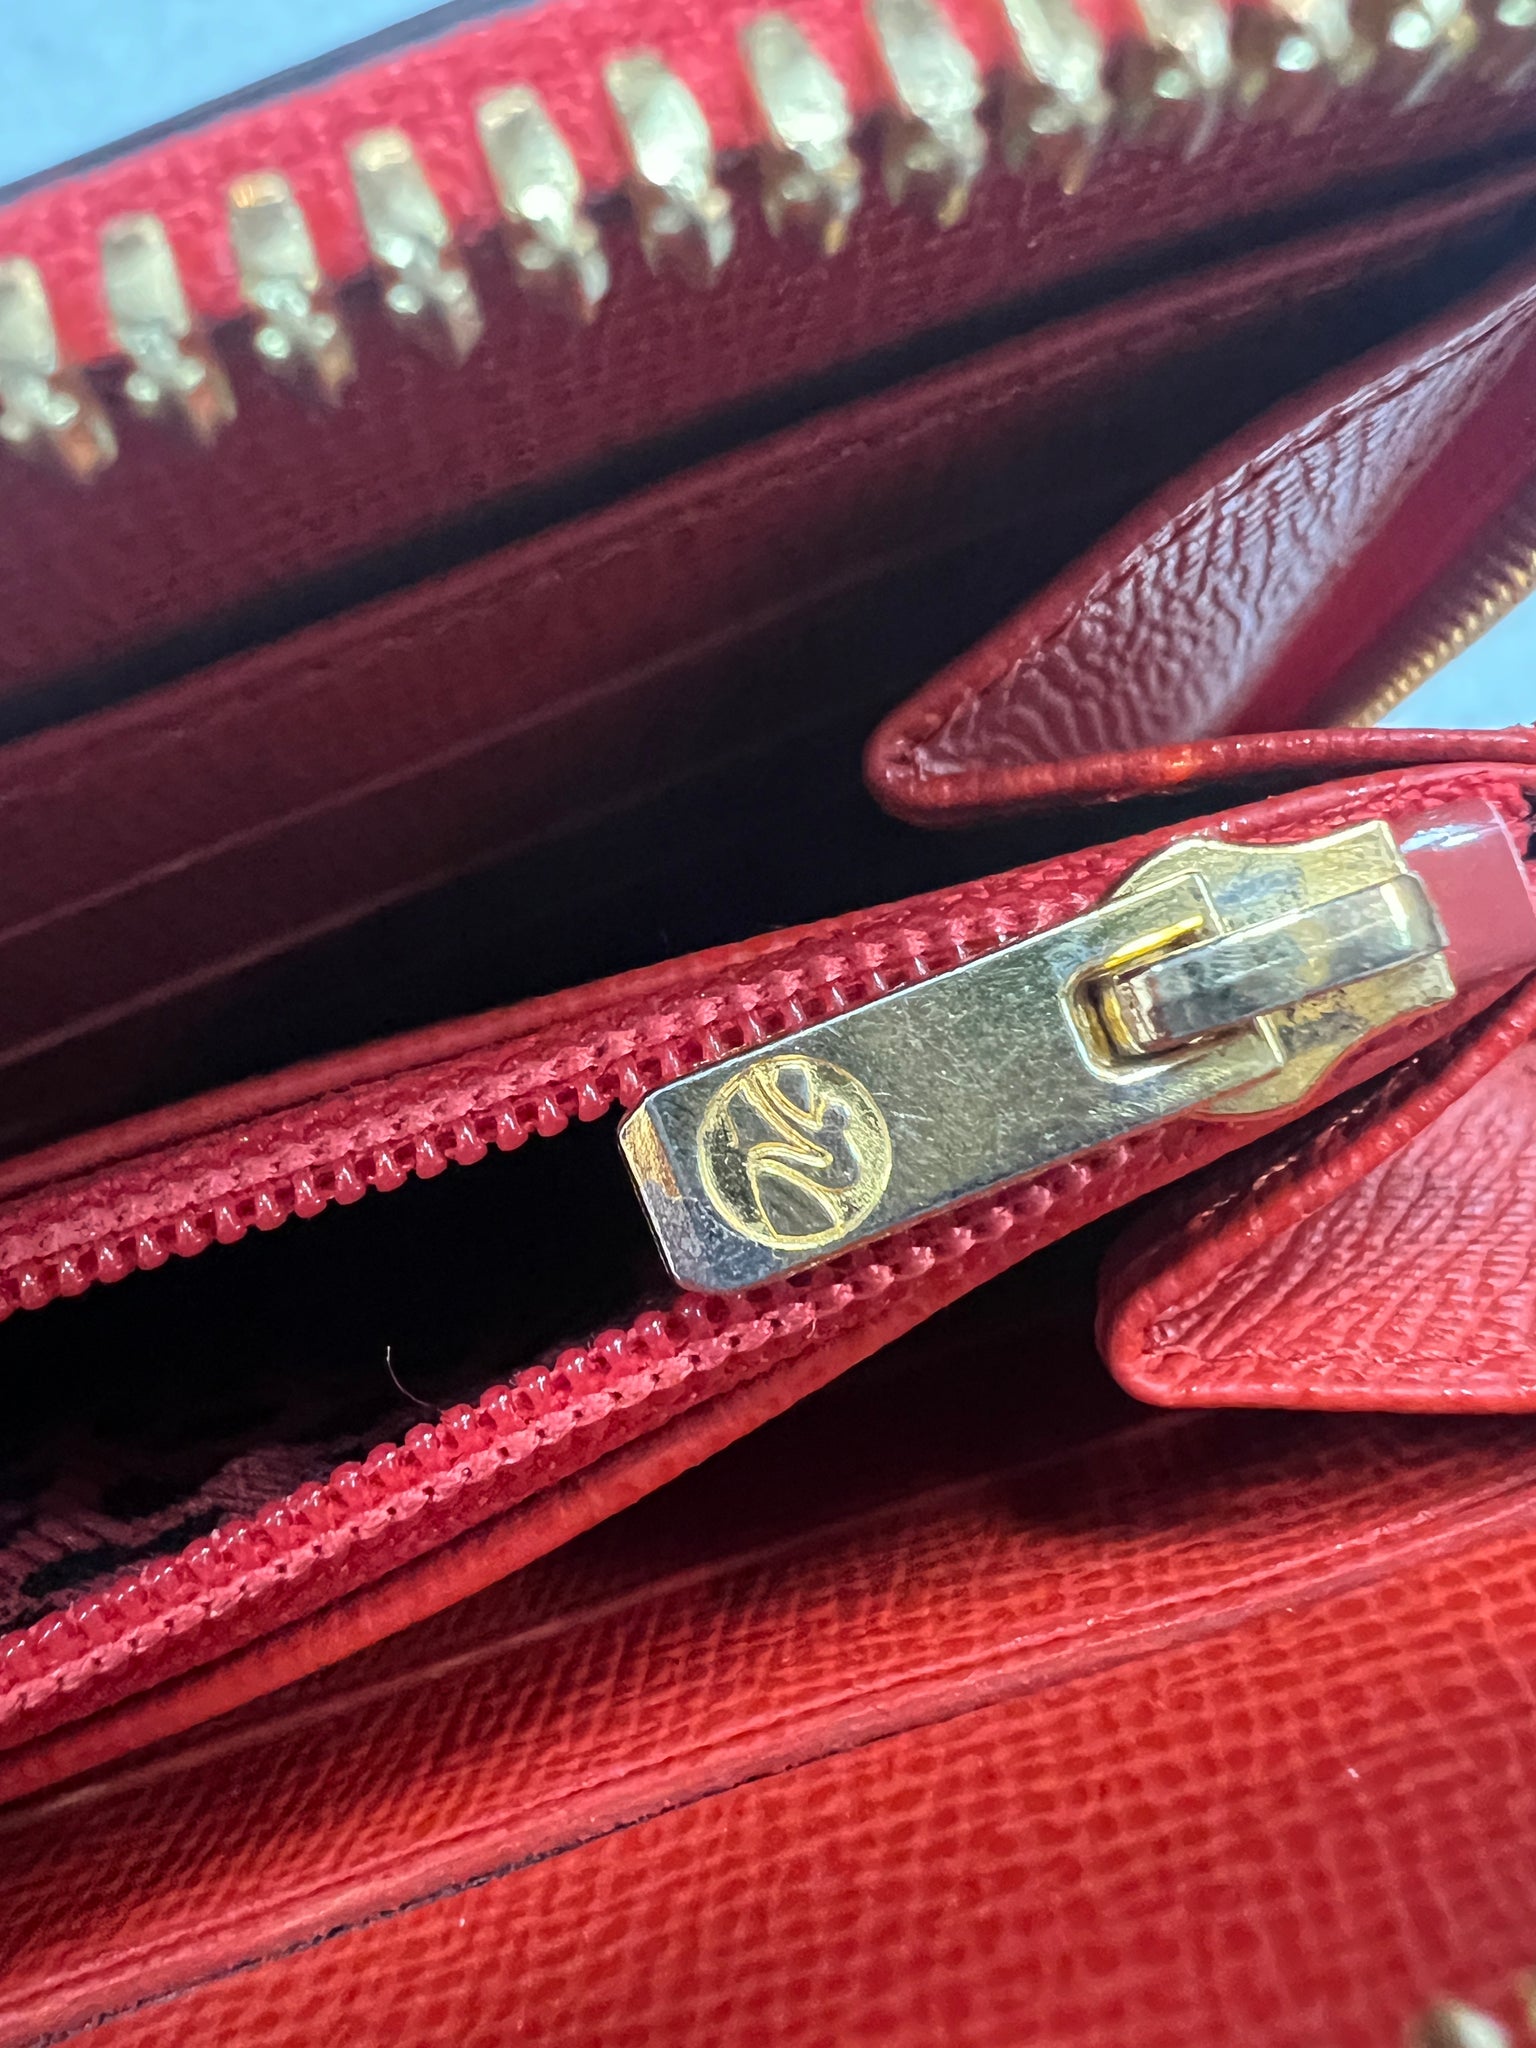 Louis Vuitton Womens Zip Around Portefeuille Comete Clutch Wallet